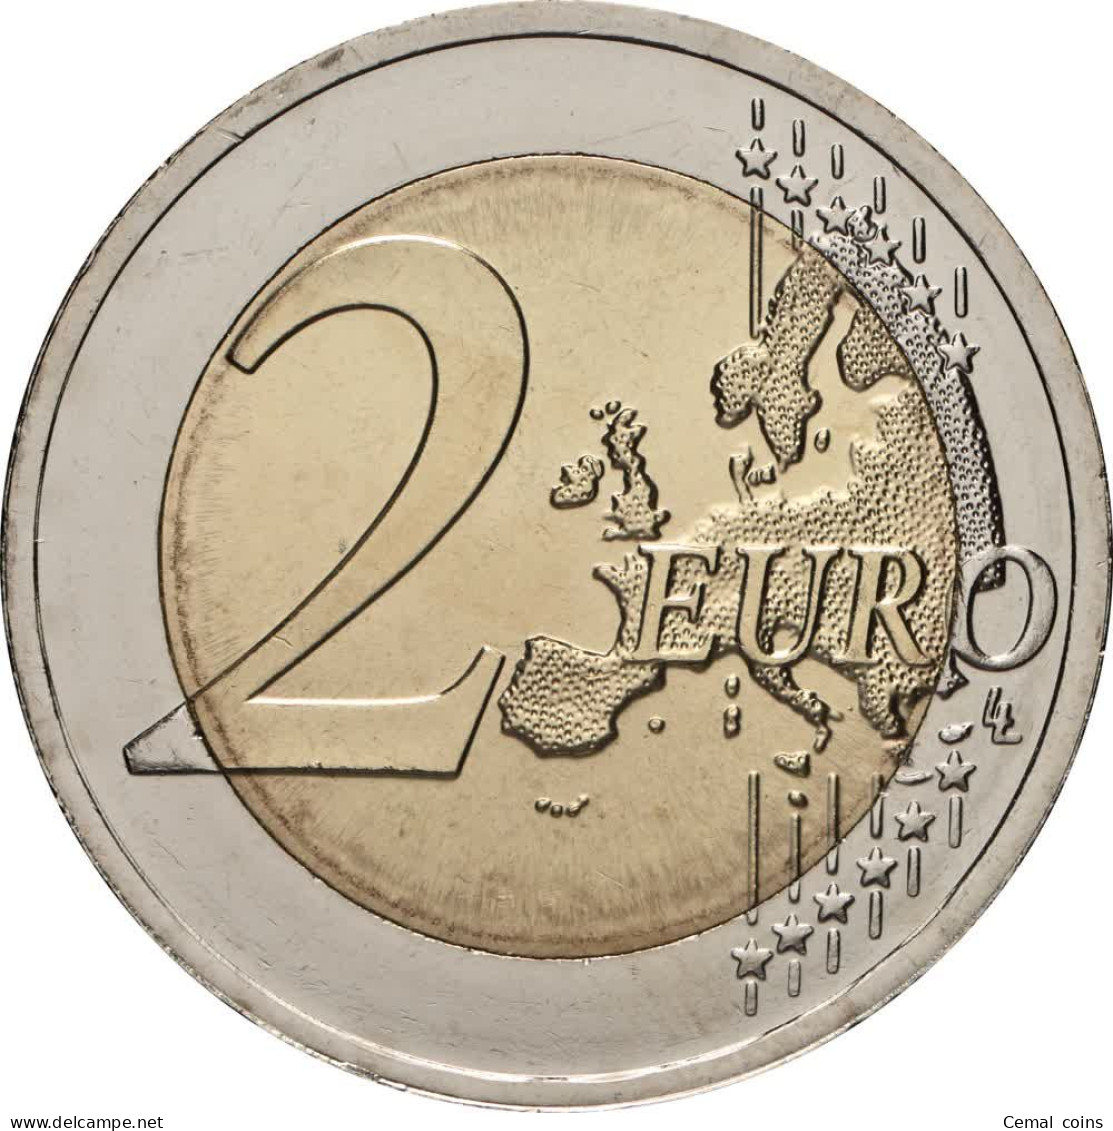 2 Euro 2022 Lithuania Coin - Suvalkija. - Lithuania